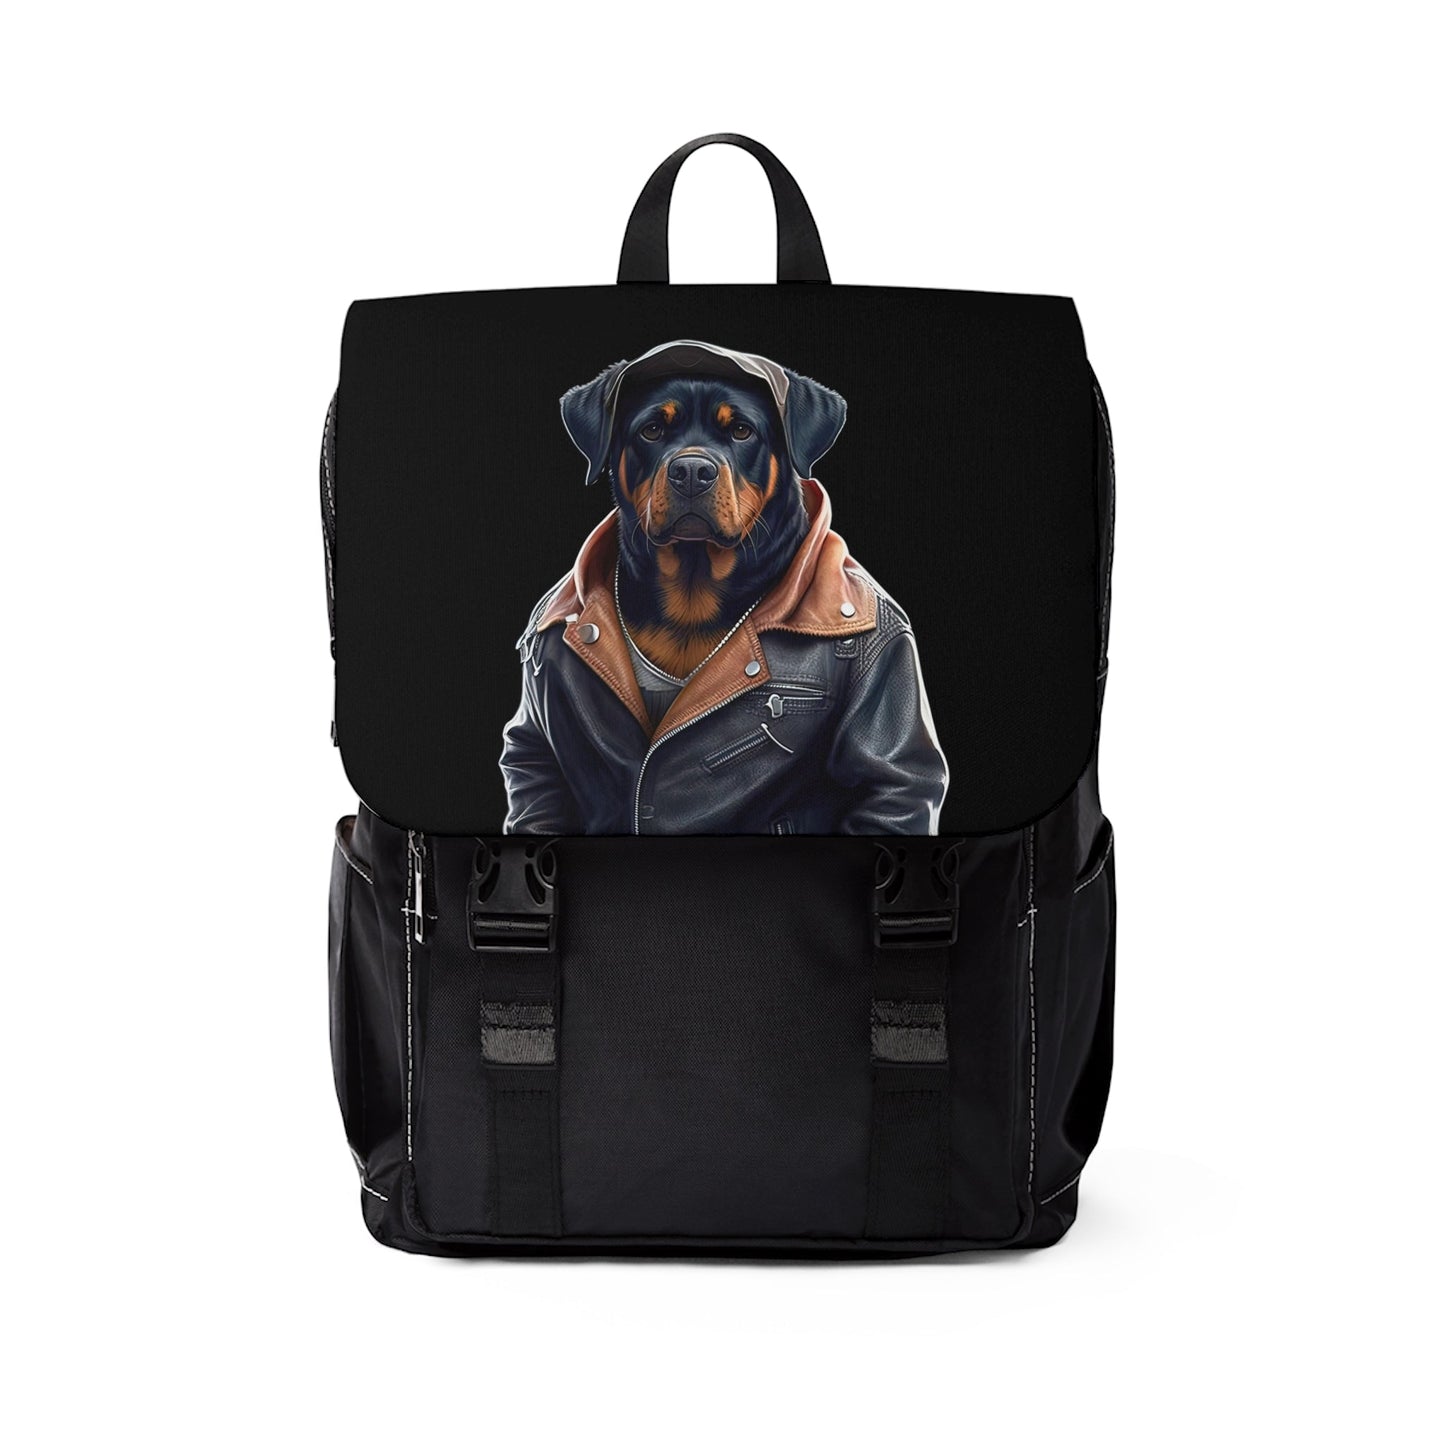 REID Unisex Durable Shoulder Backpack | Stylish Pack